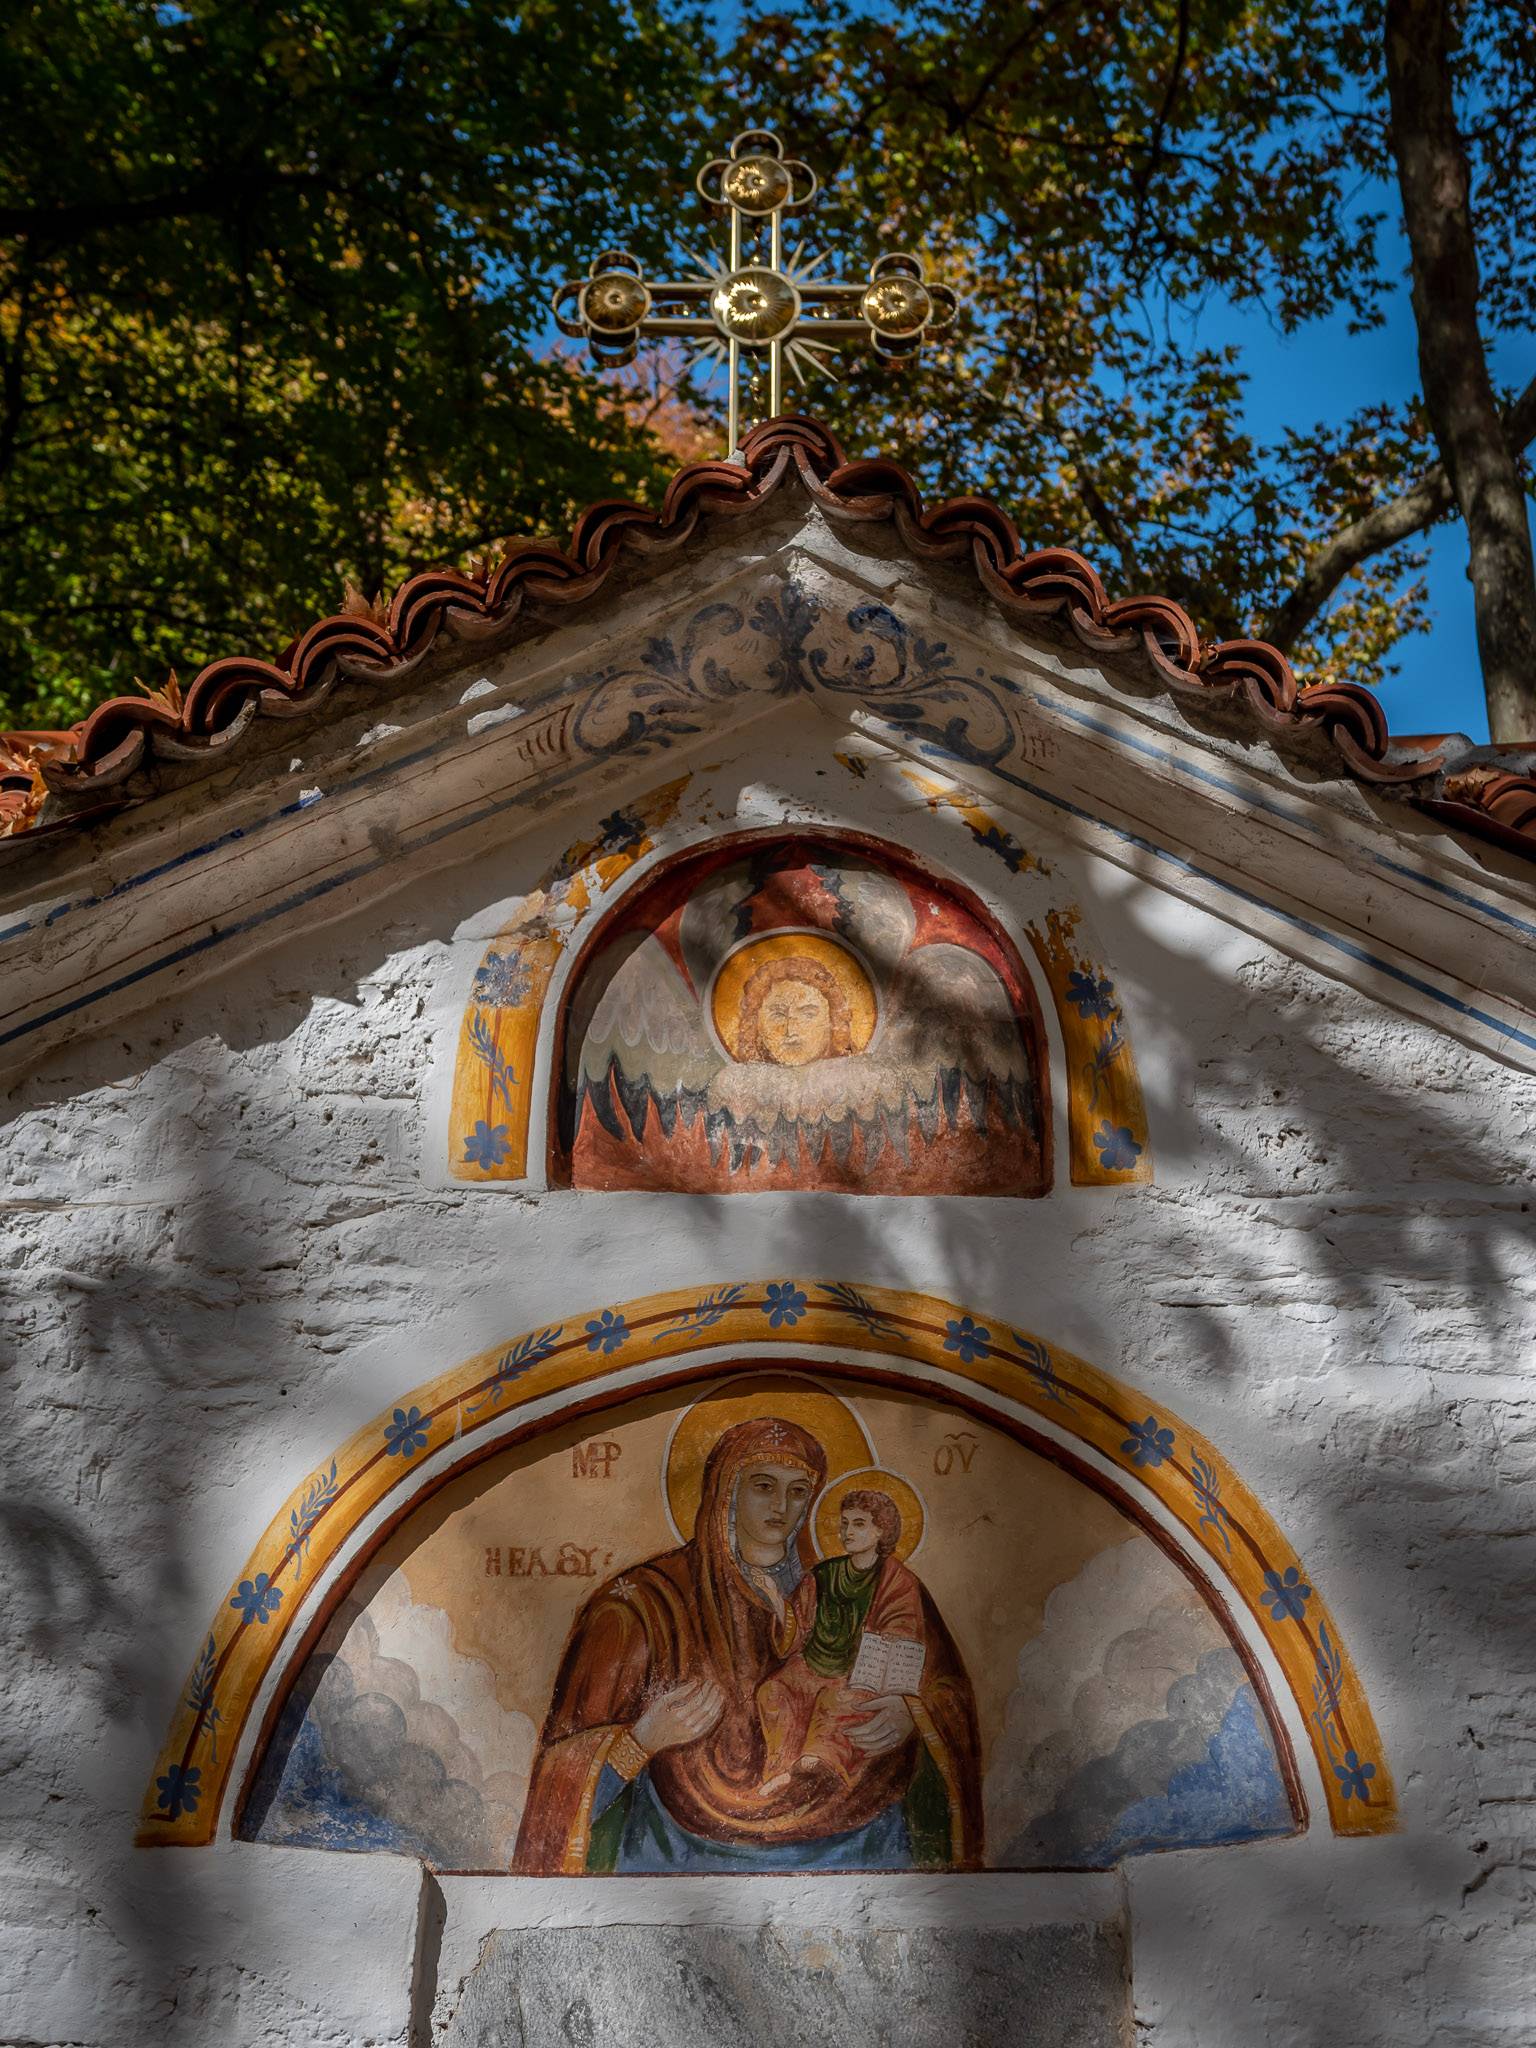 Smaller chapels hidden in the forest